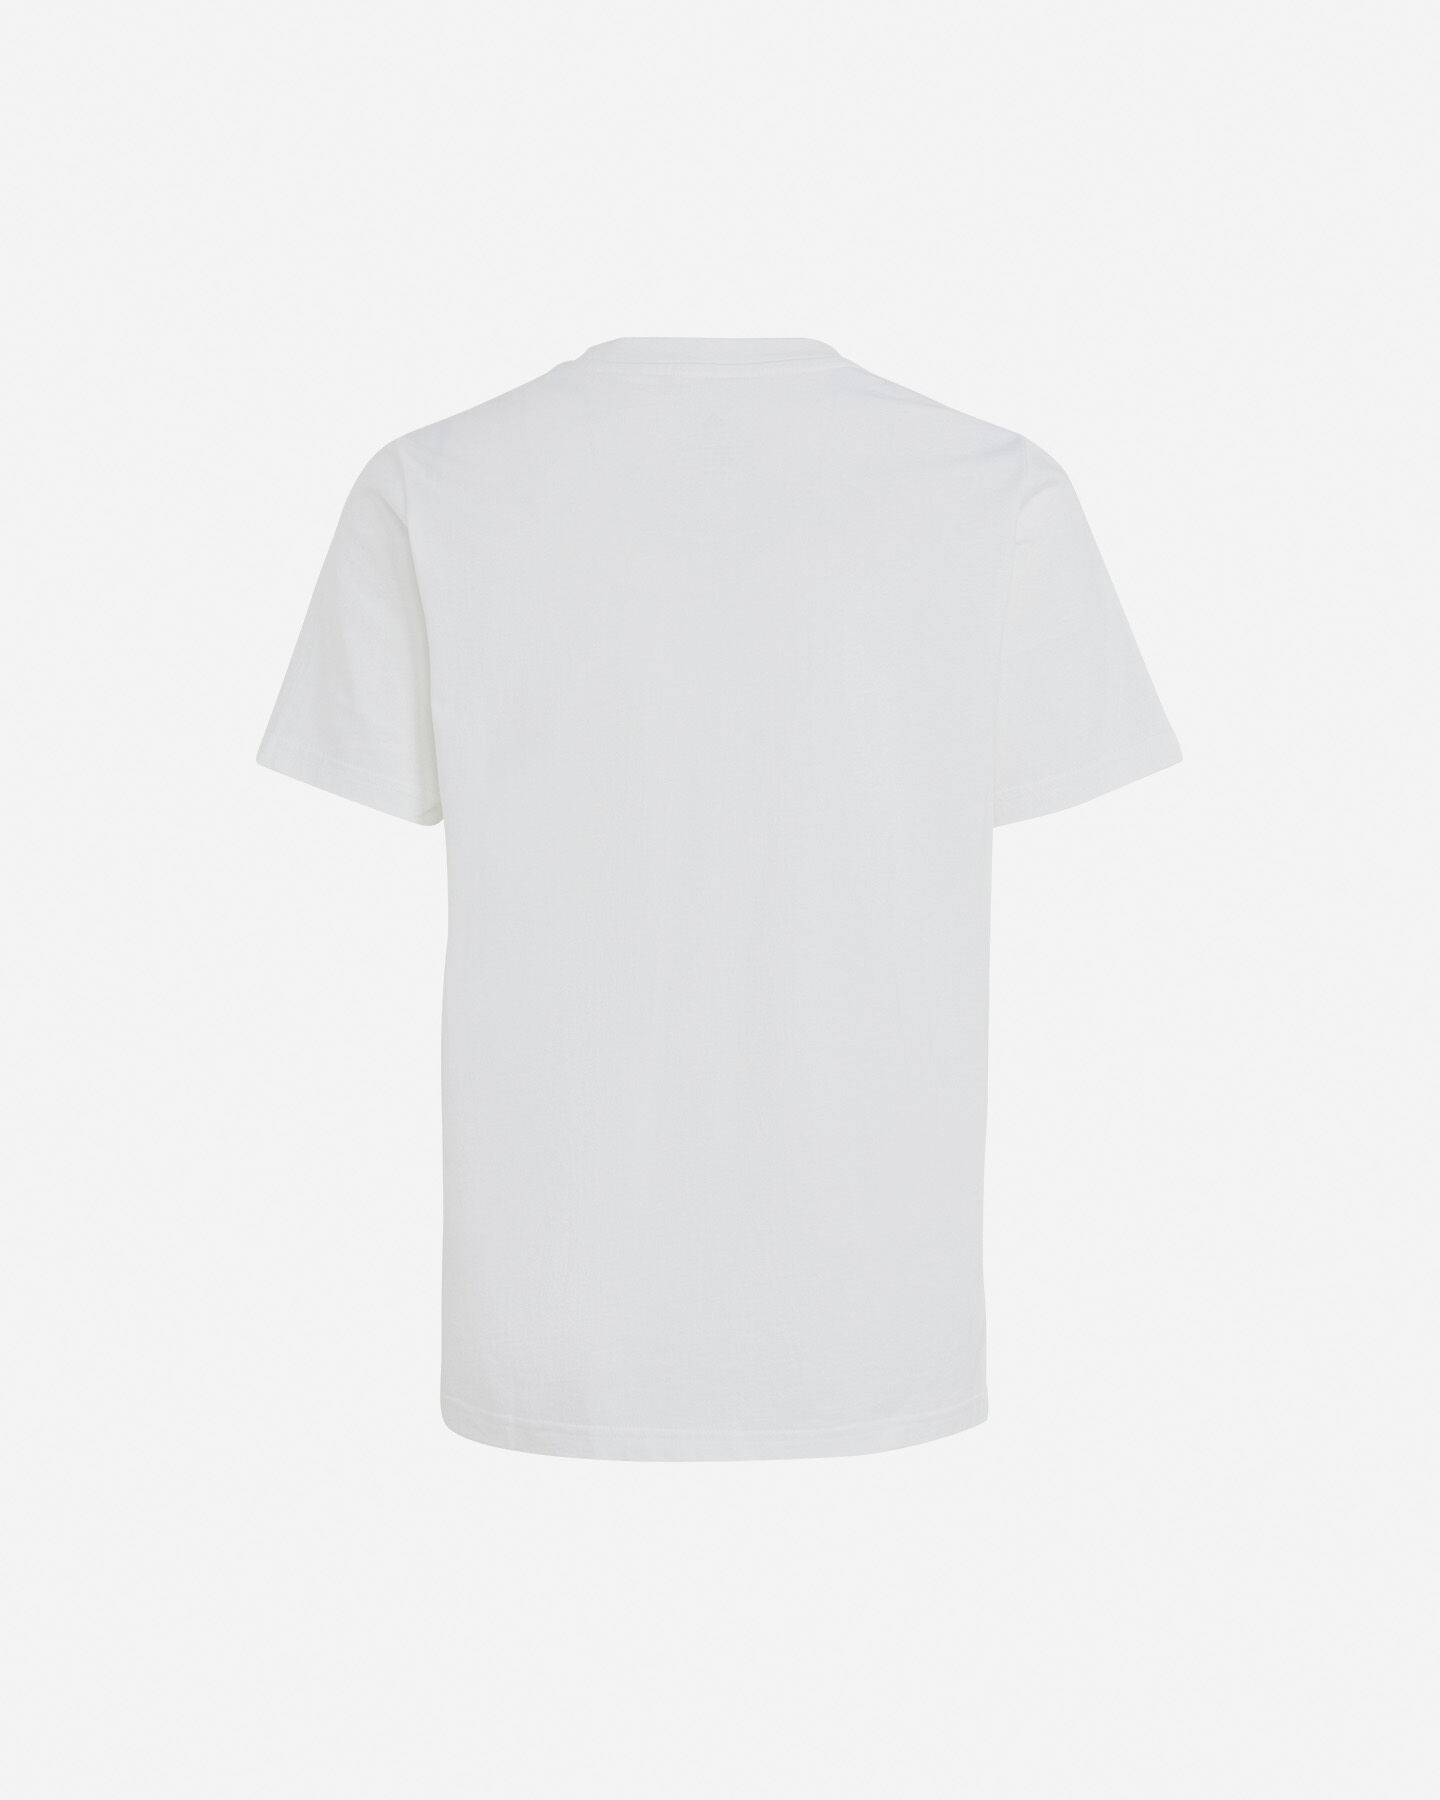  T-Shirt ADIDAS GRAFICA SMALL LOGO JR S5520406|UNI|5-6A scatto 1